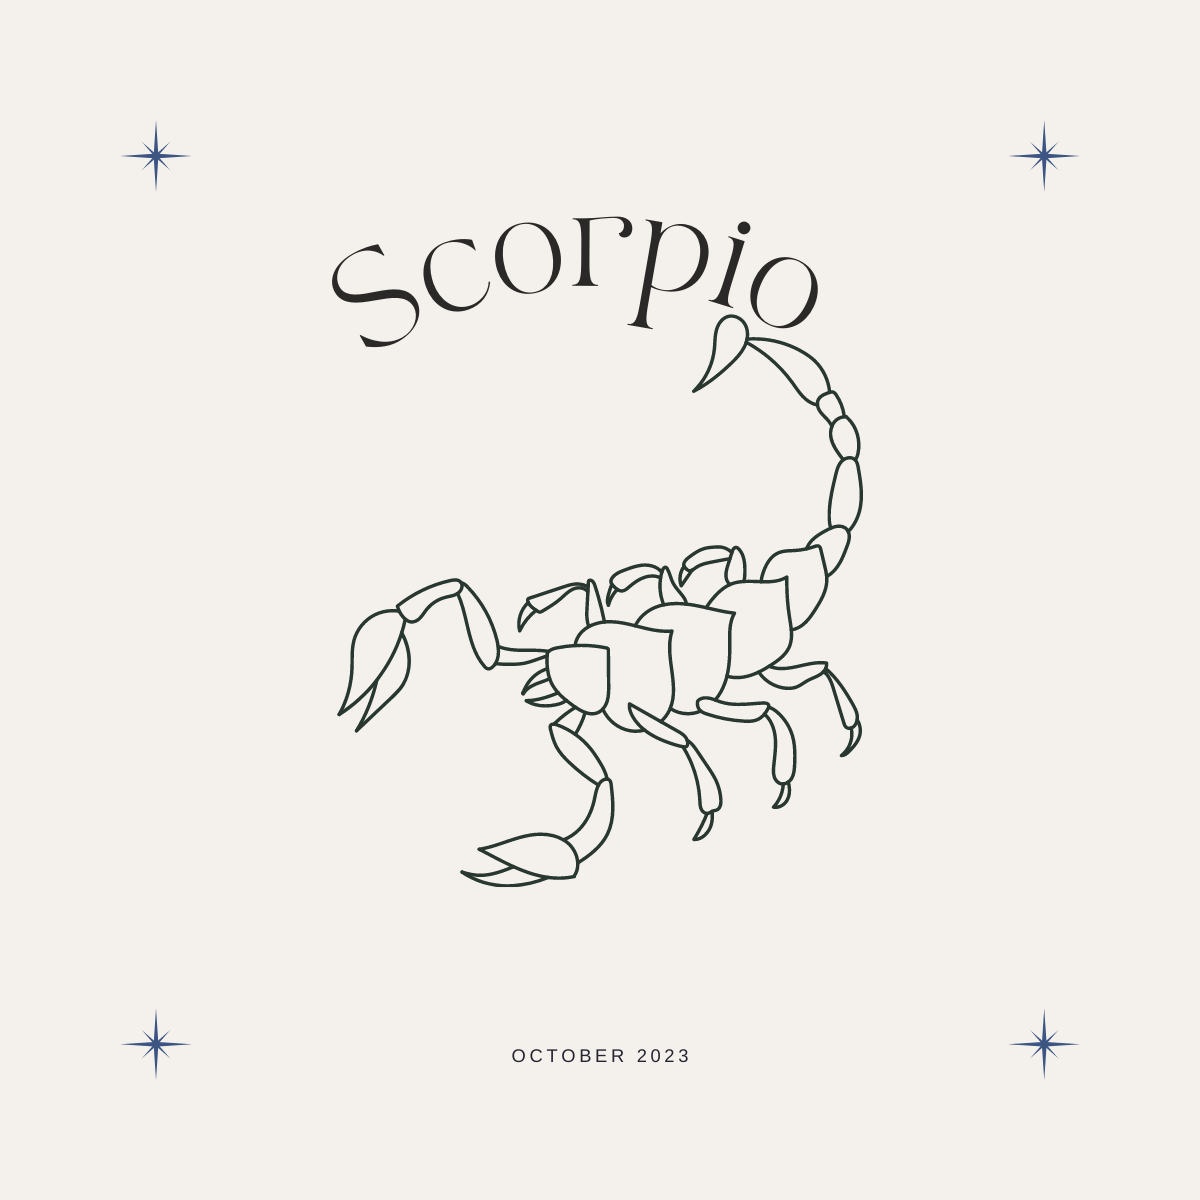 Scorpio (October 2023 - November 2023)